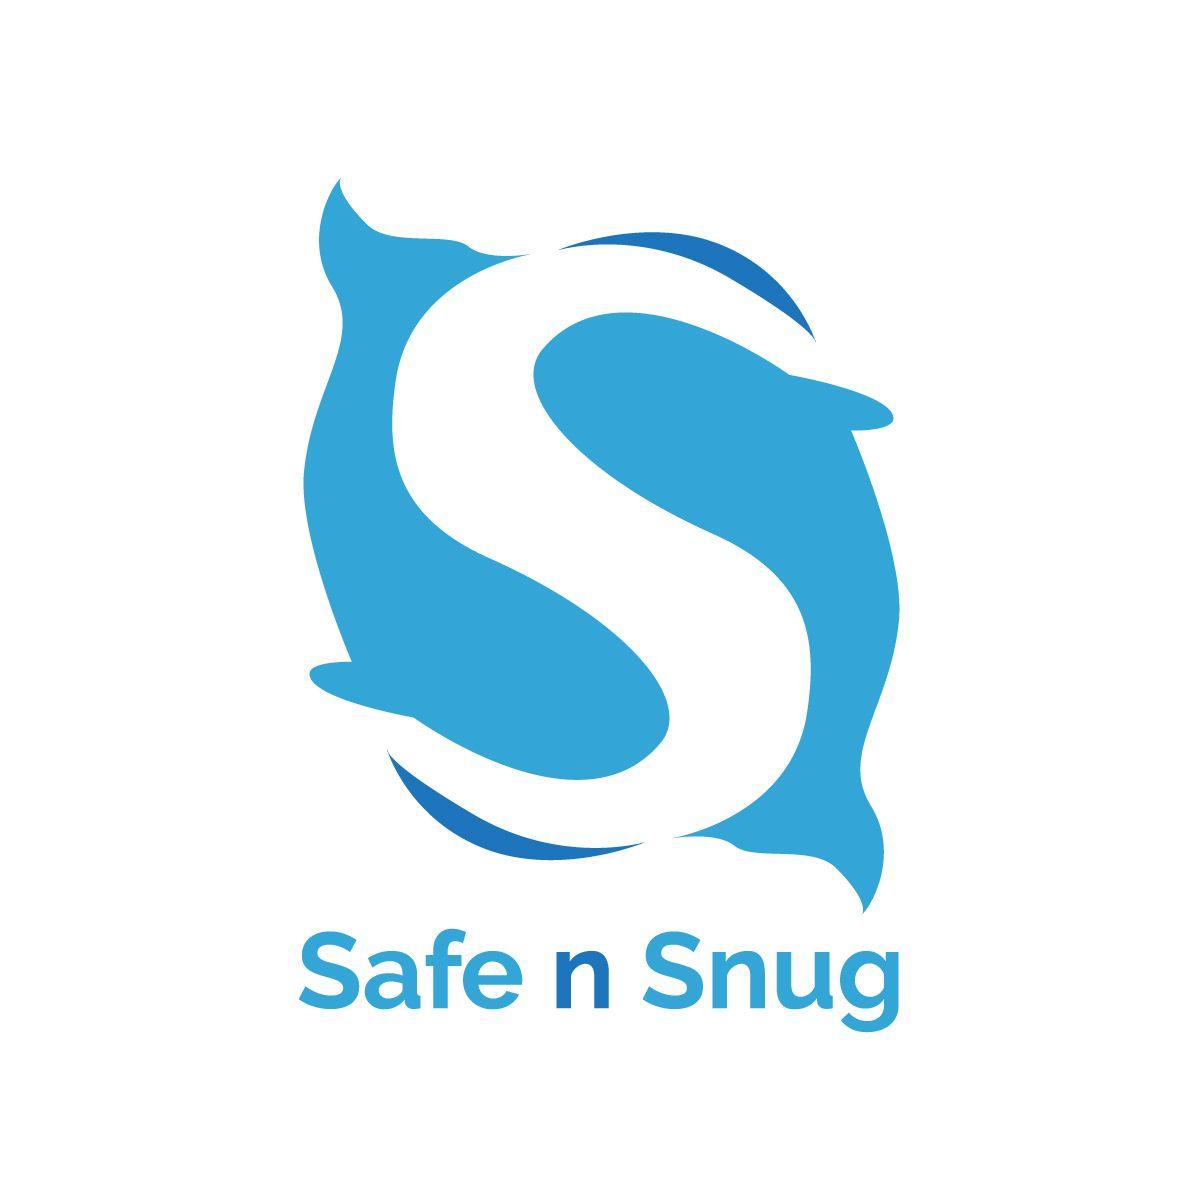 Cot Logo - Bold, Playful, Baby Care Logo Design for Safe n Snug by Hendra ...